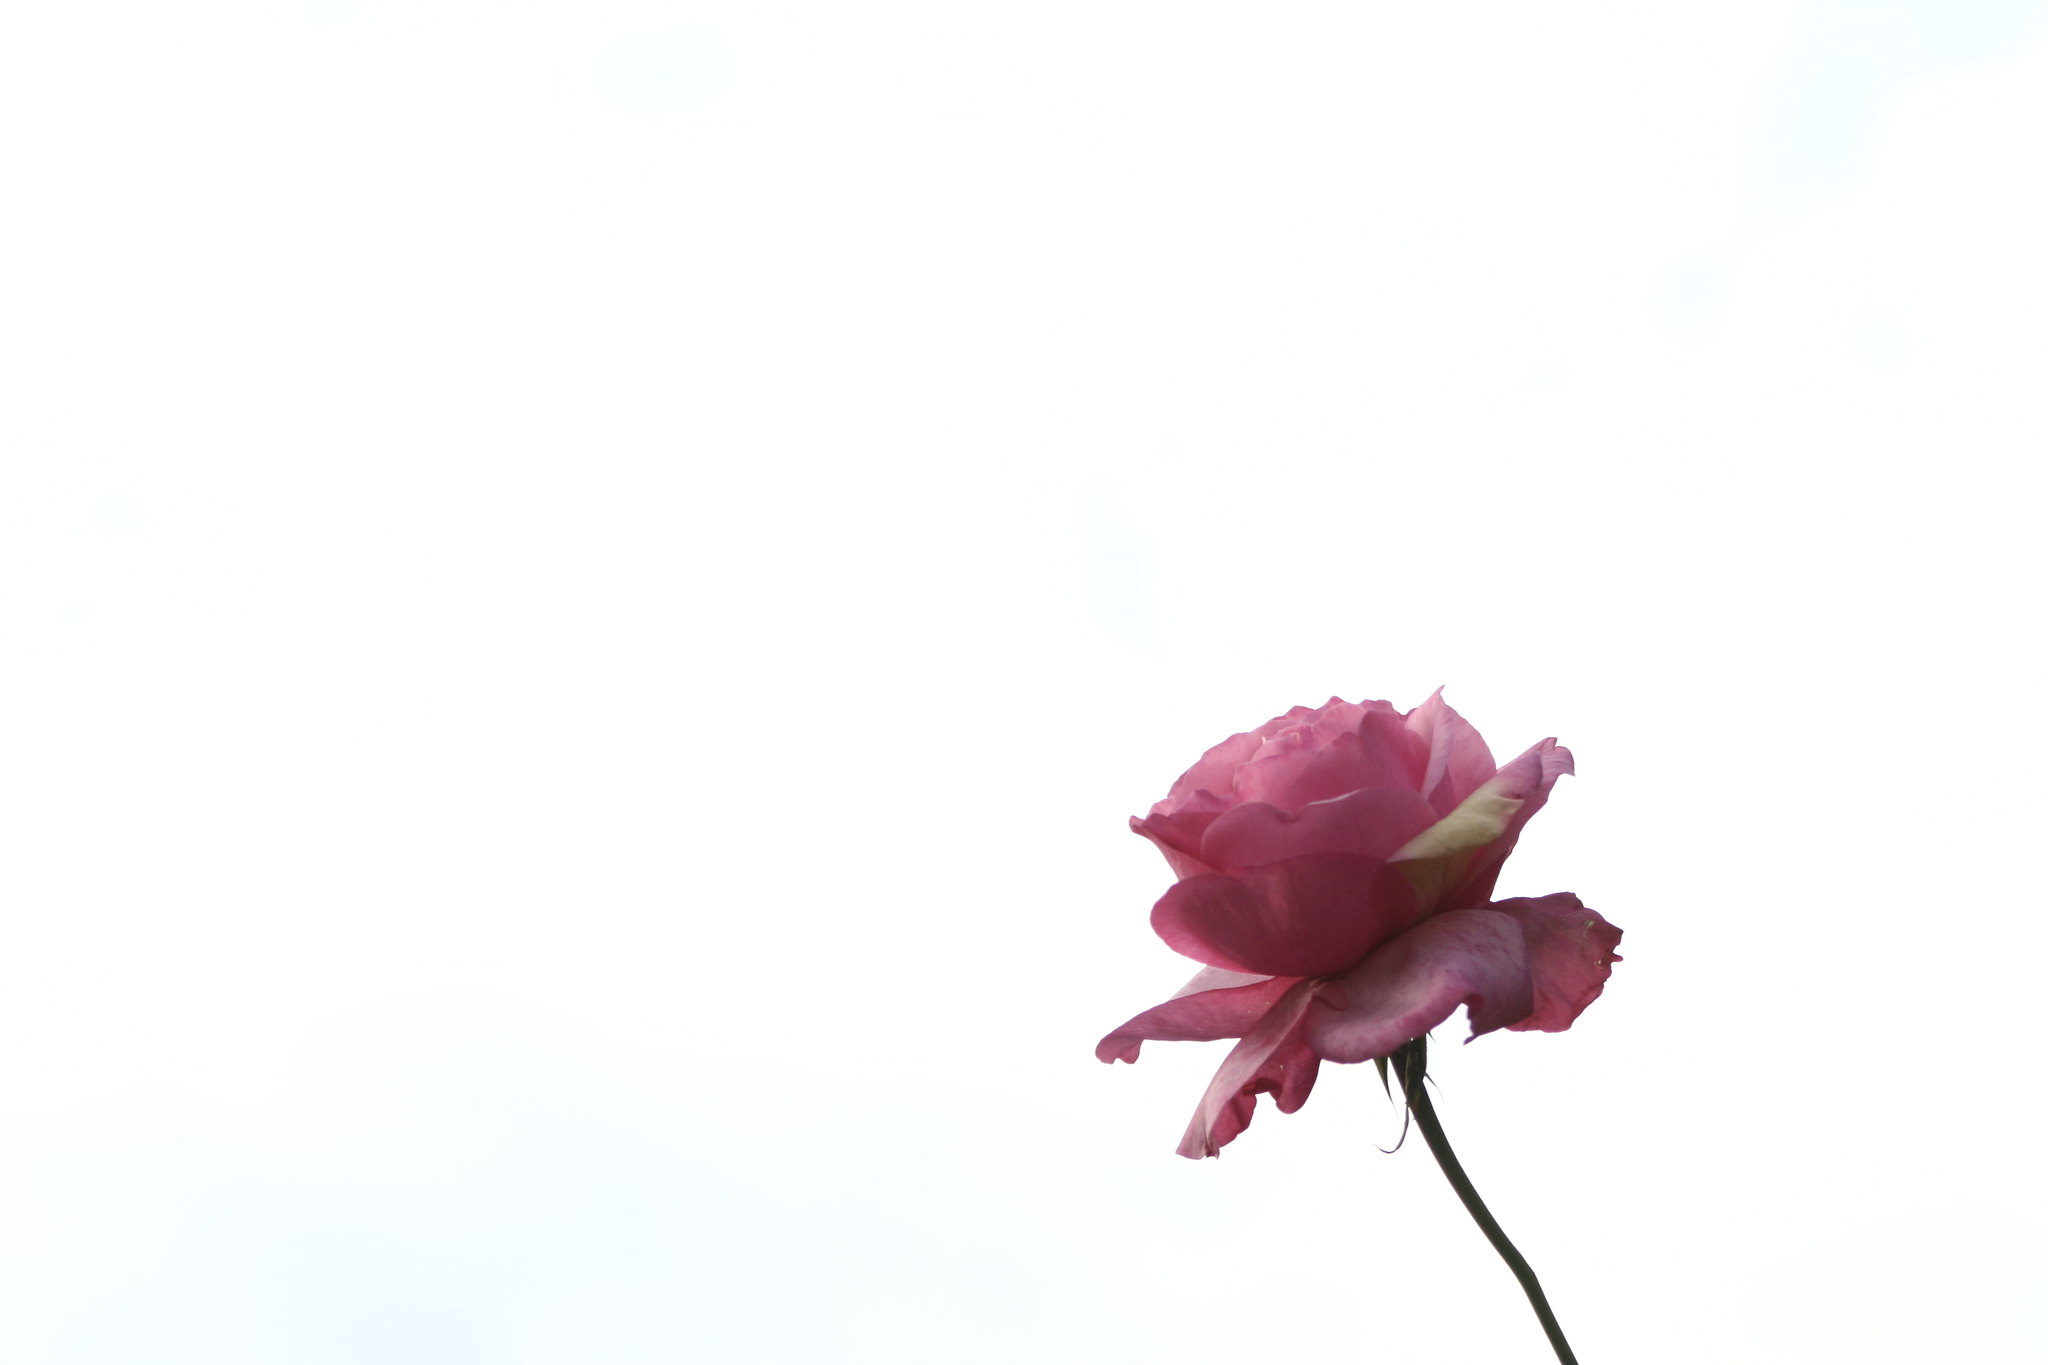 Pink rose, January sky